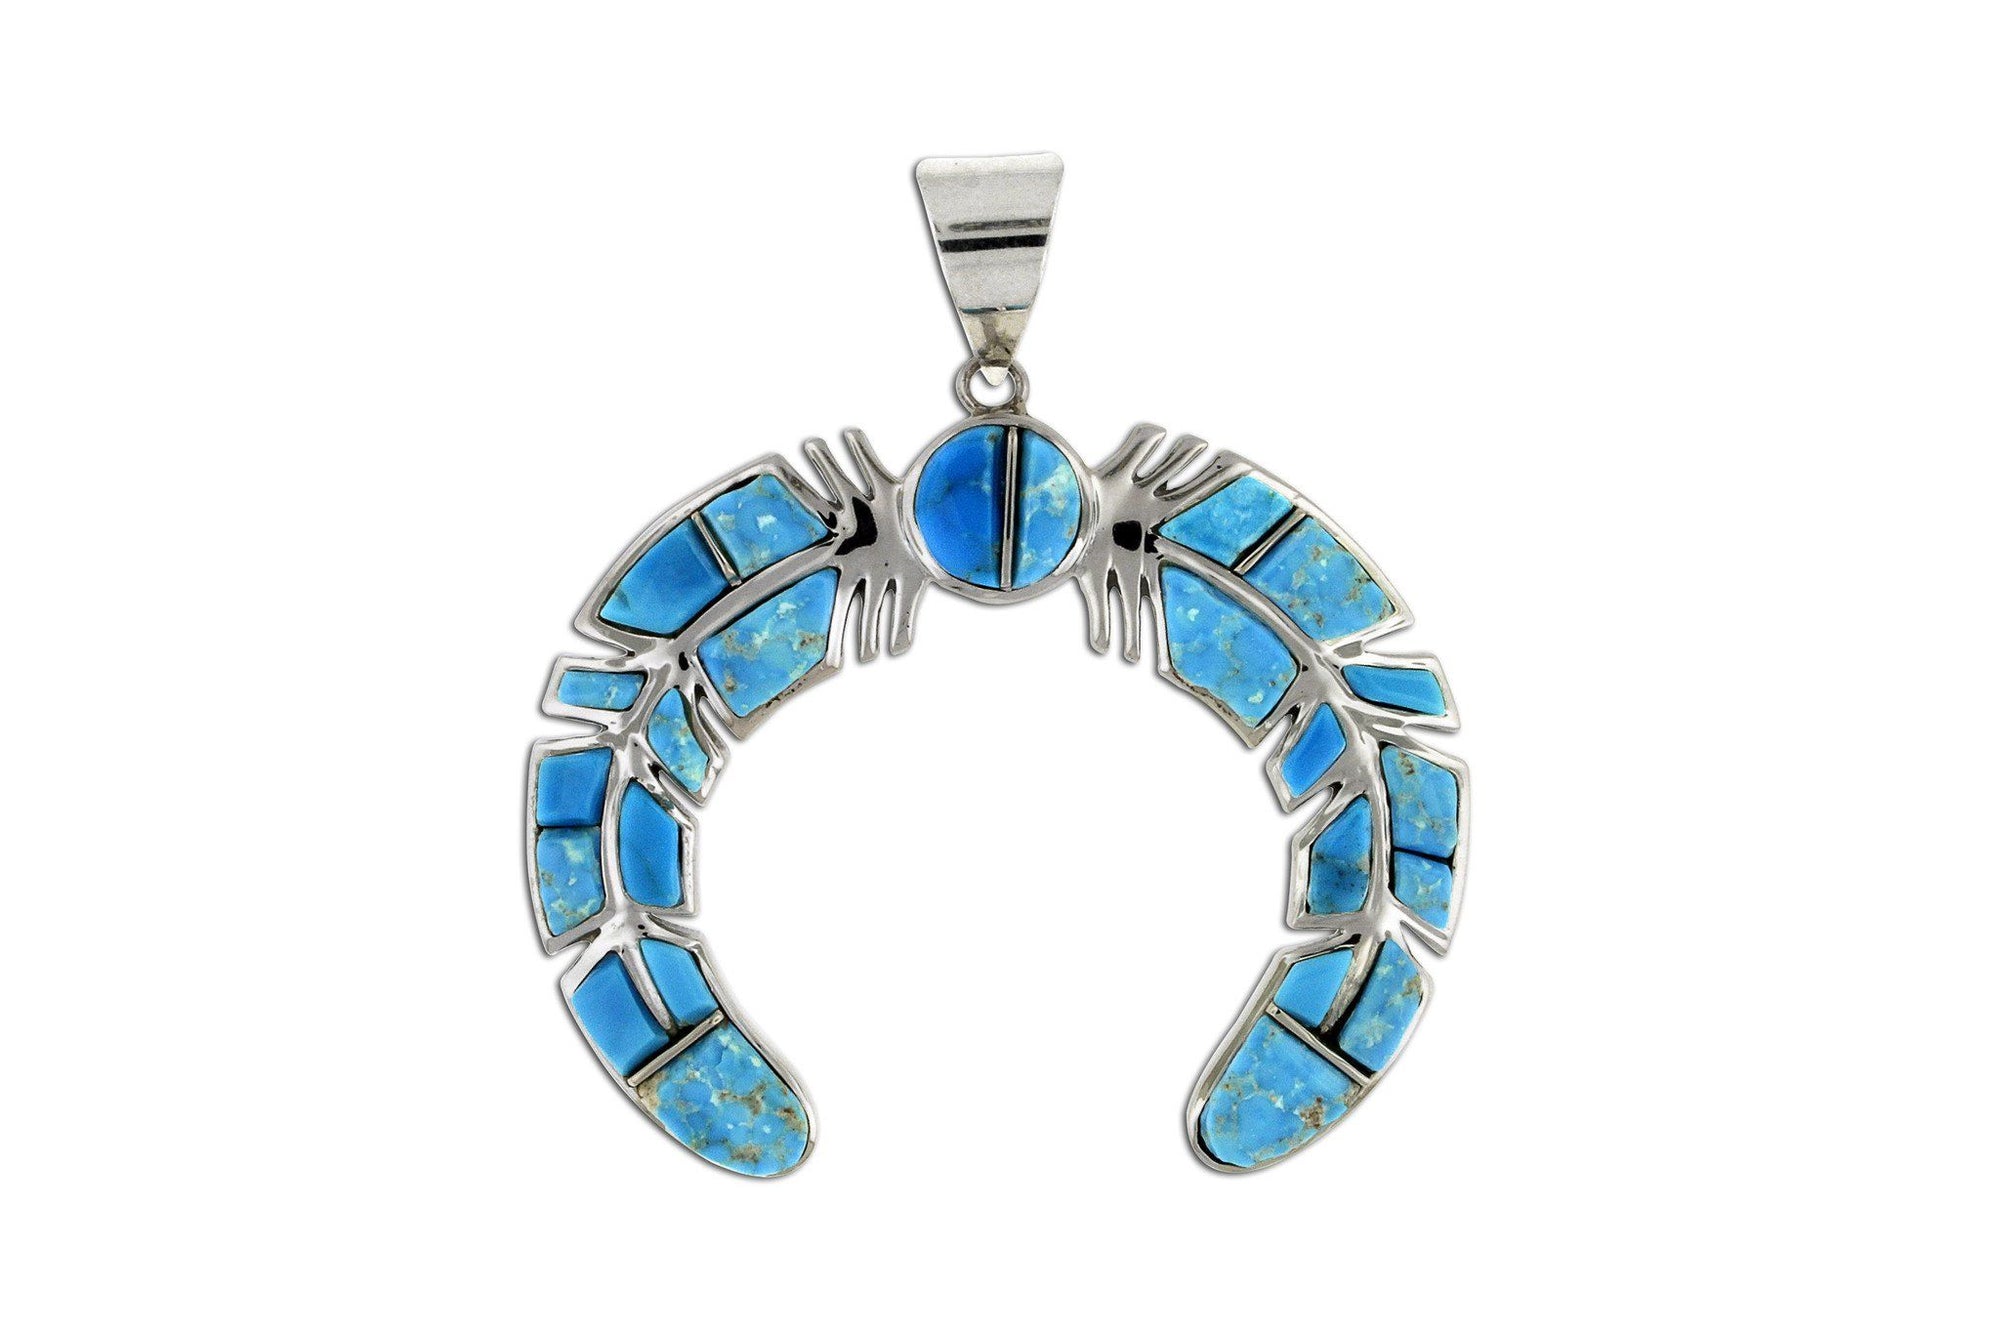 David Rosales Naja Pendant - Native American Turquoise Jewelry